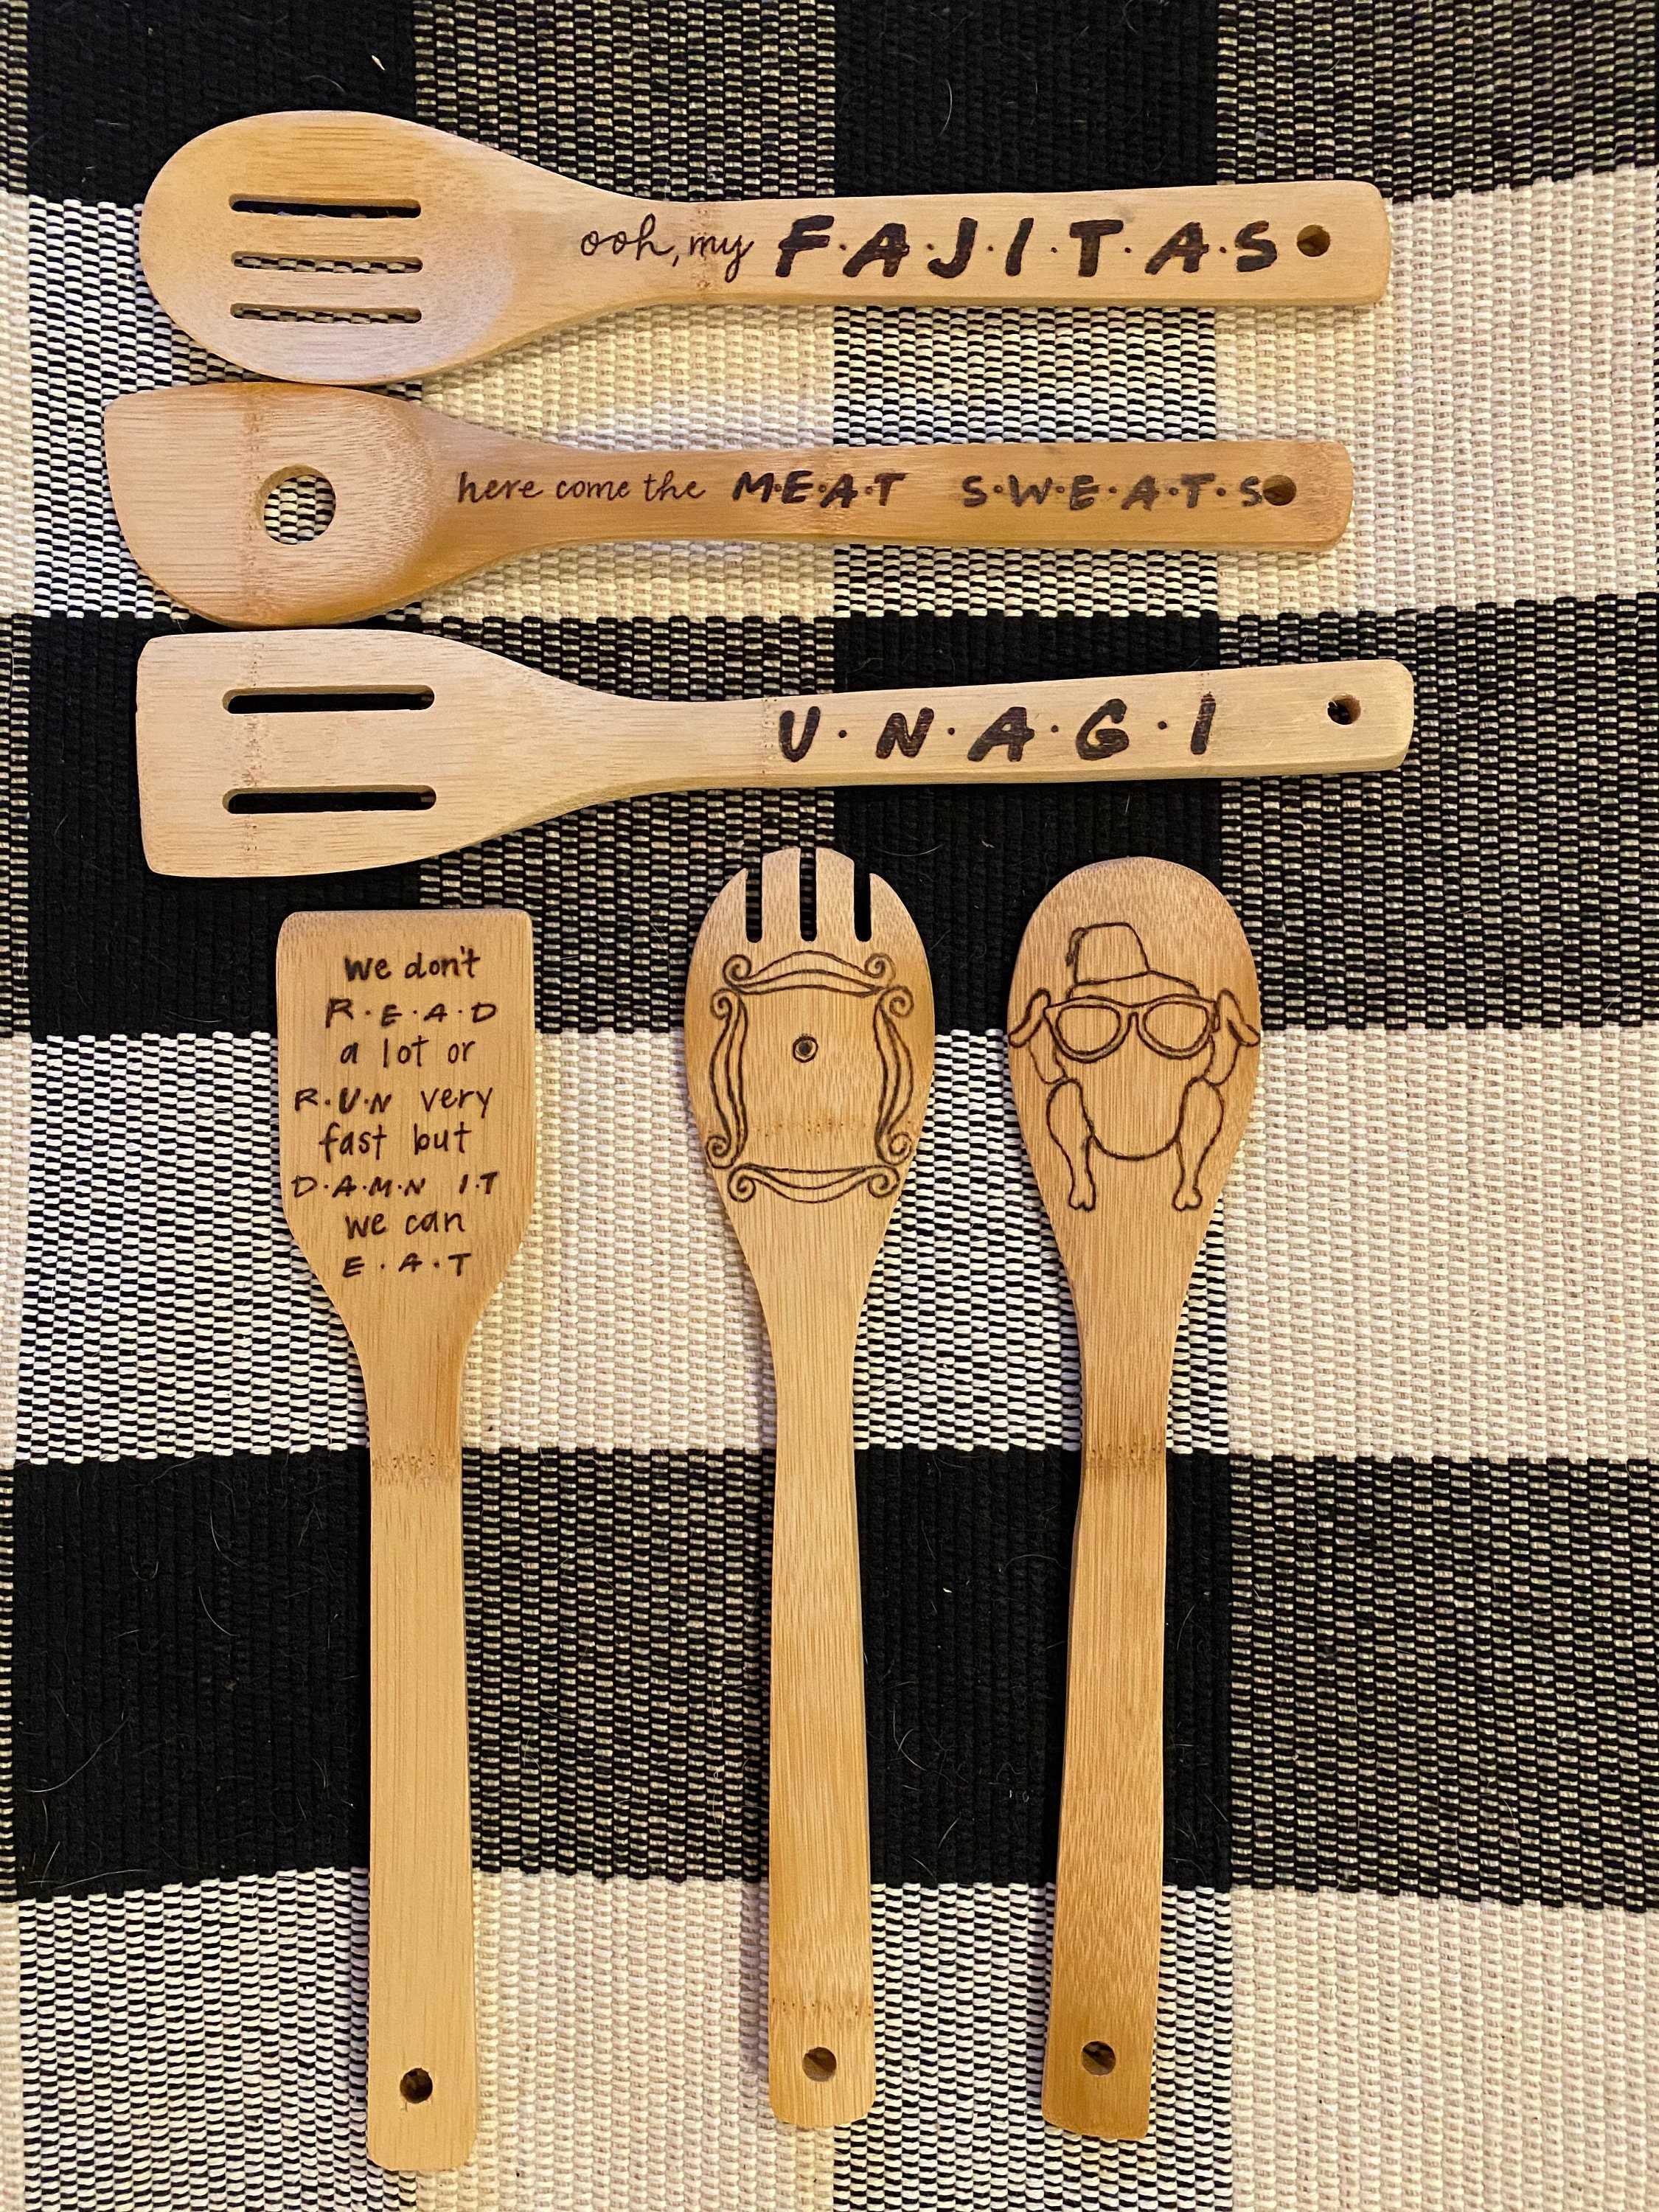 FRIENDS Themed Wooden Spoon